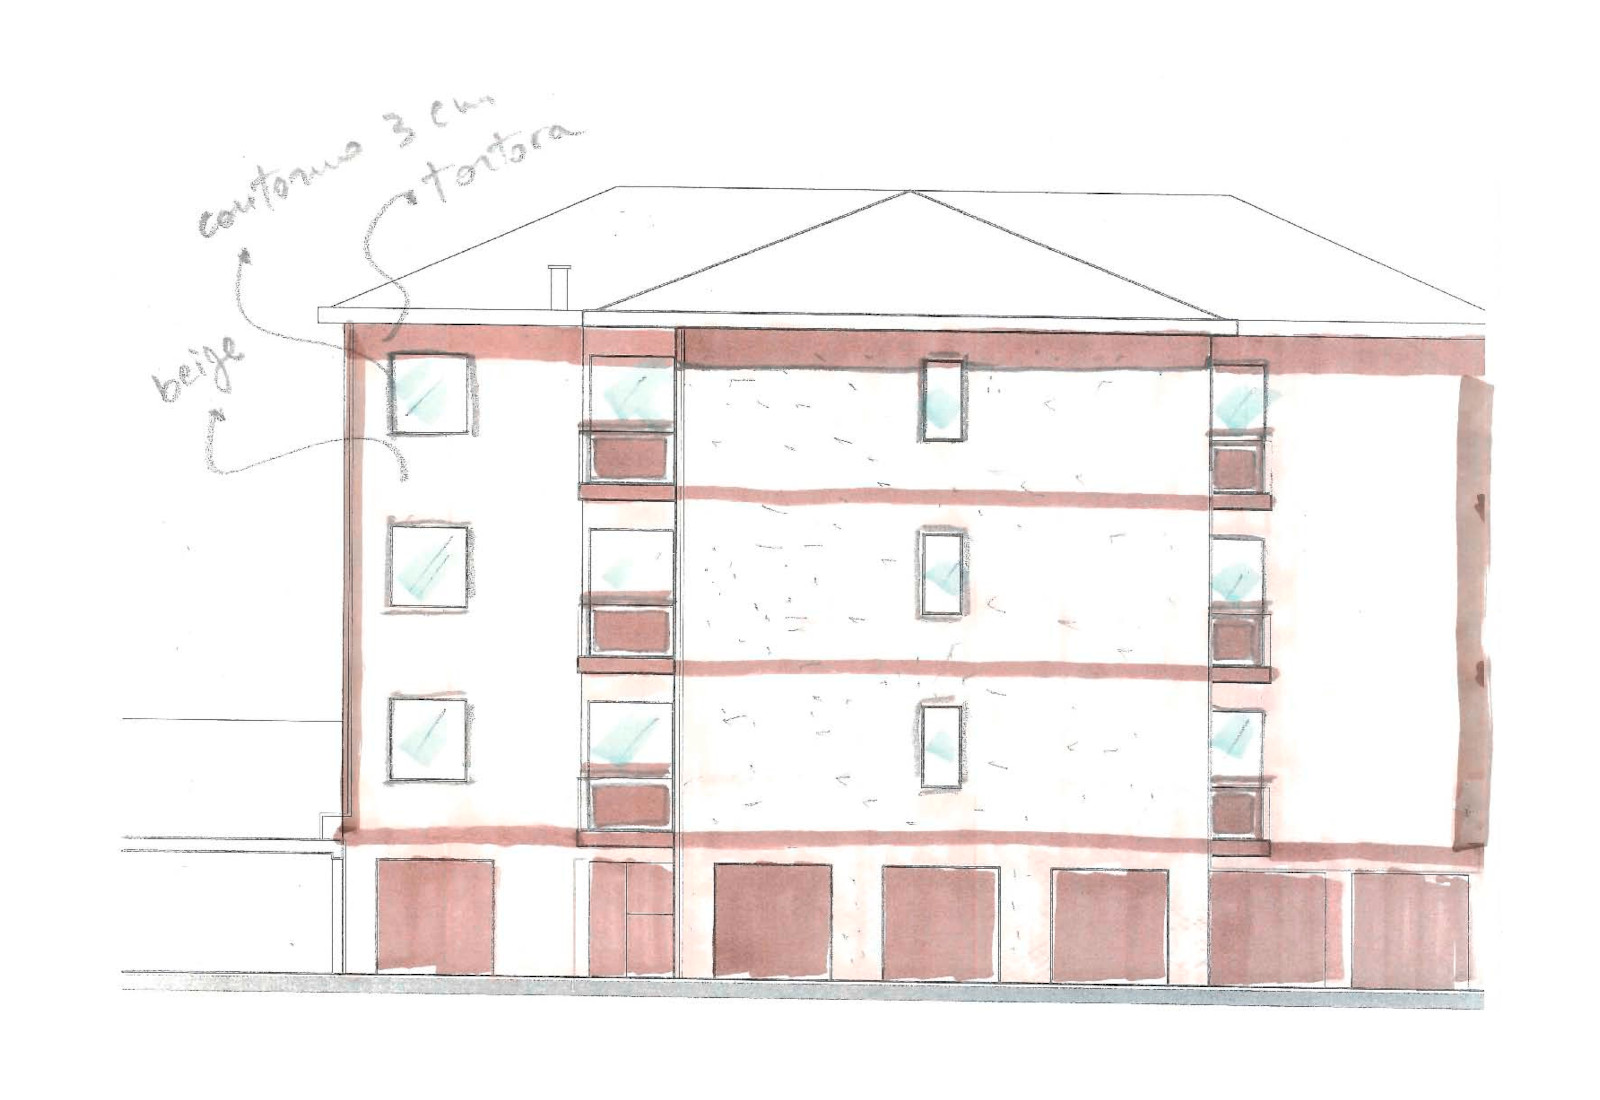 Residential ensemble (energy upgrading), 3 Gioberti street, Pogliano - Project sketch